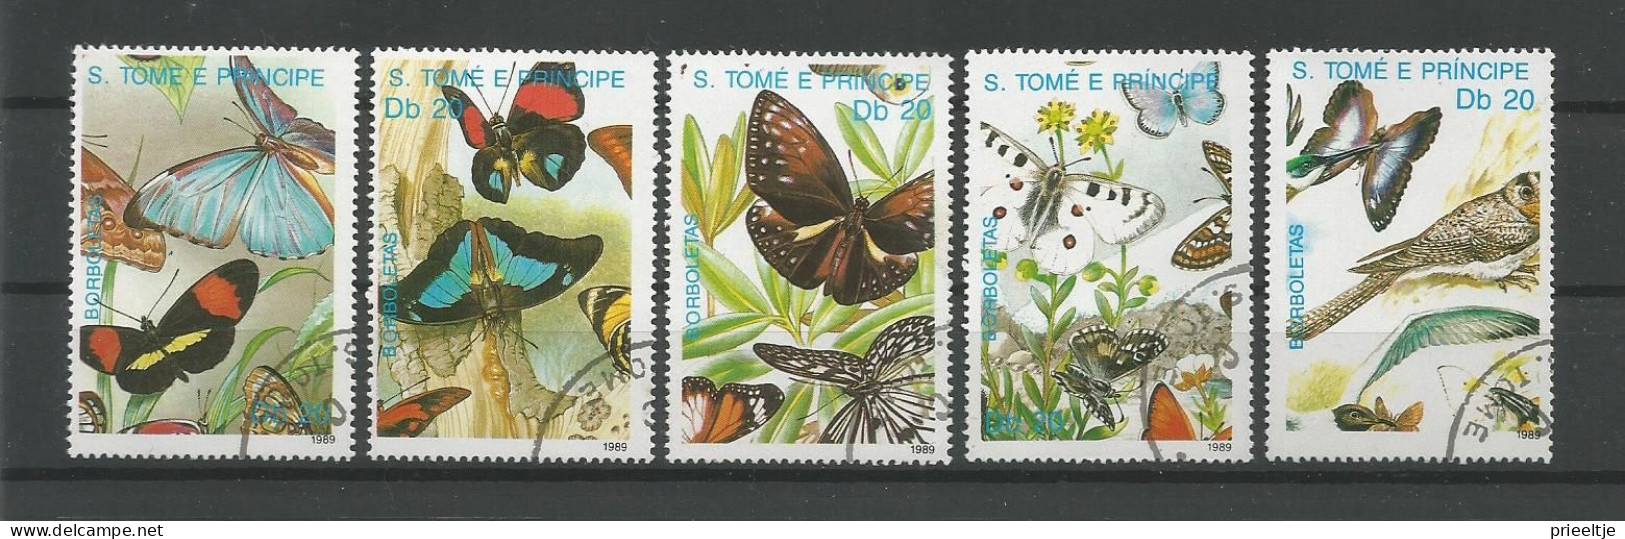 St Tome E Principe 1989 Butterflies & Birds  Y.T. 965/969 (0) - Sao Tome Et Principe